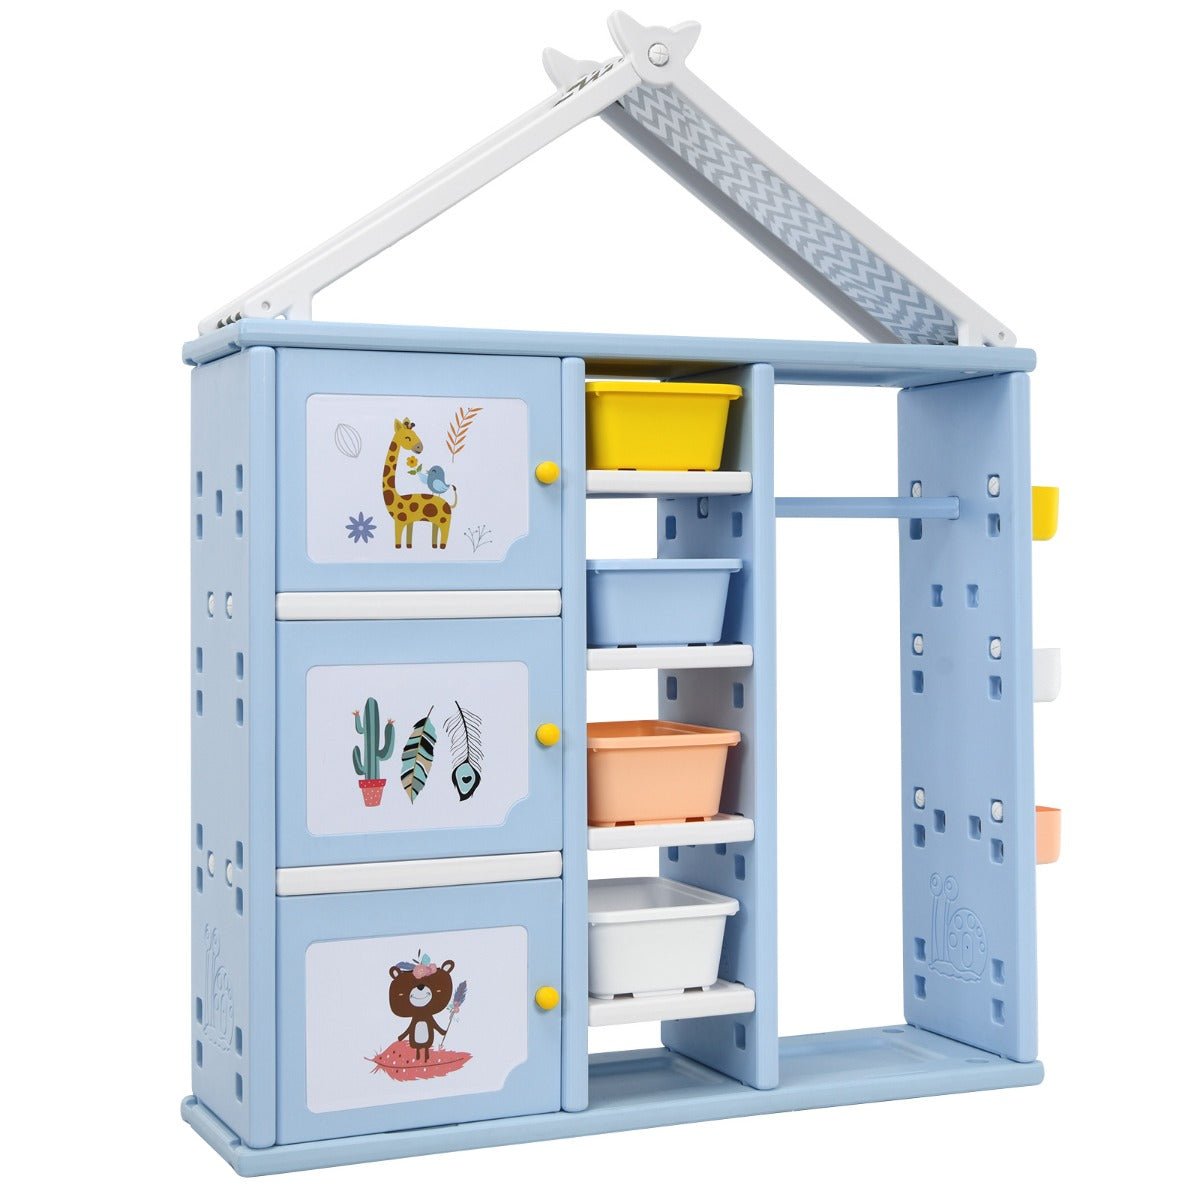 Kids Costume Dresser - Blue Storage Closet for Pretend Play and Organization